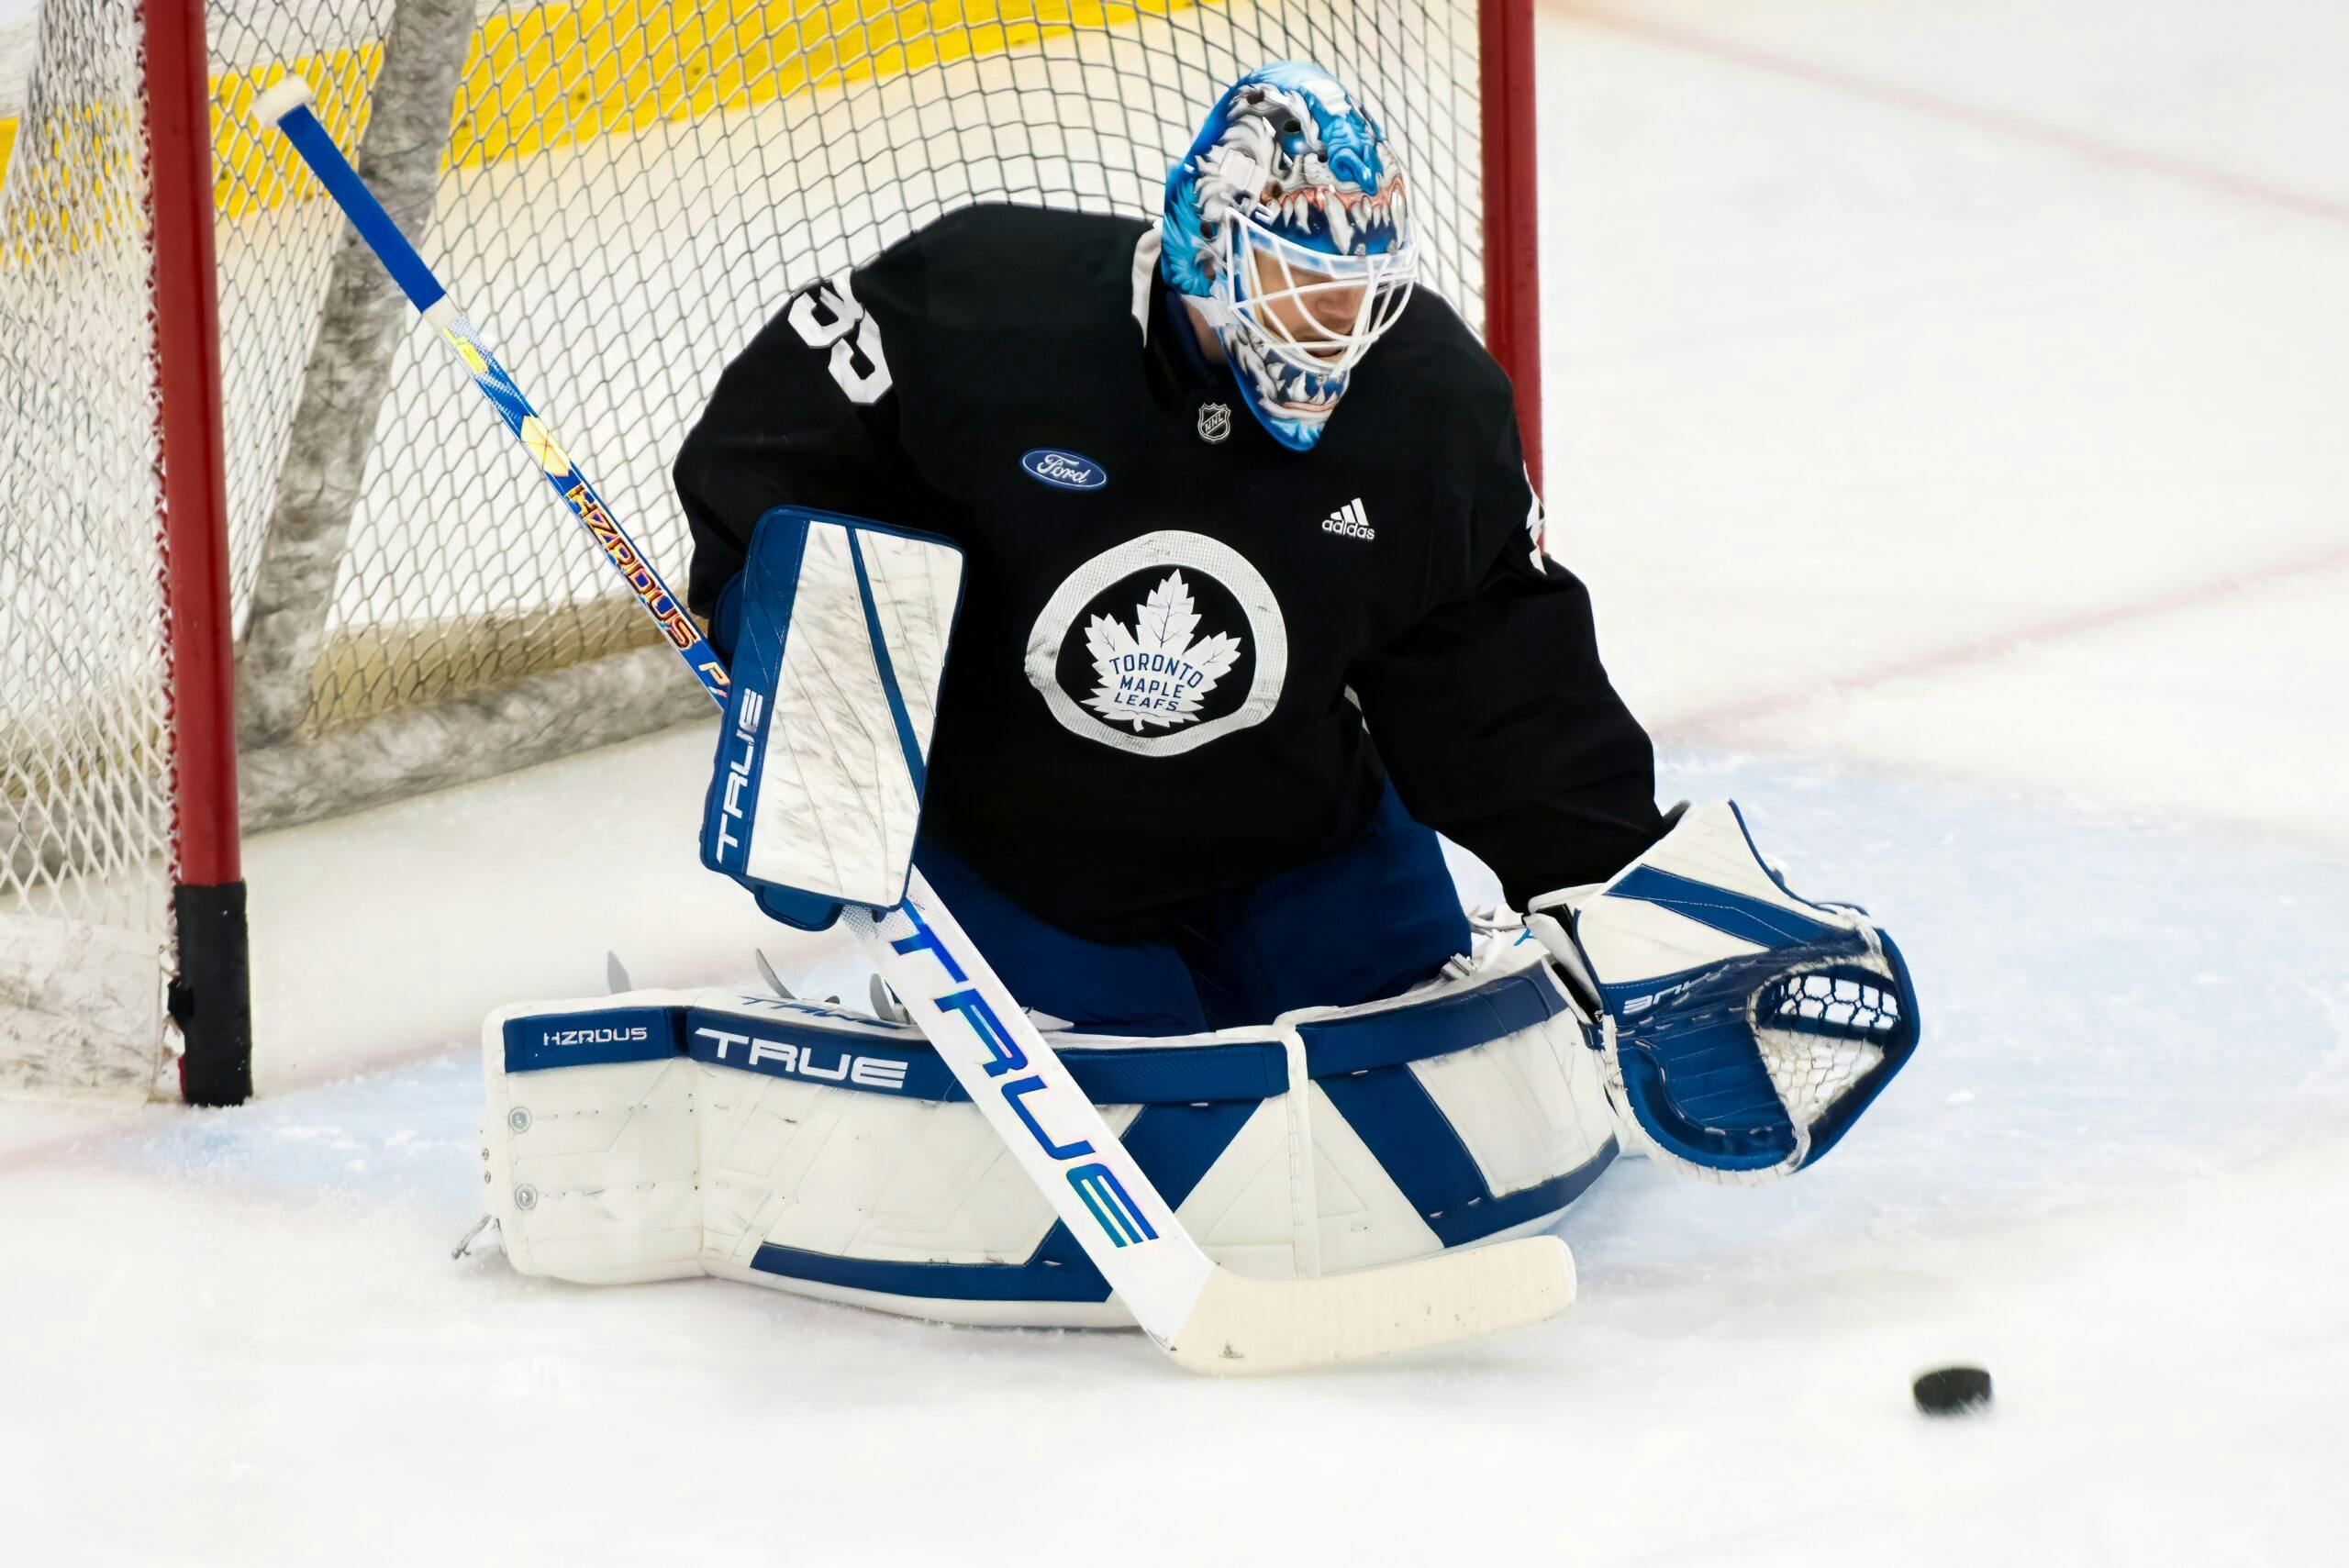 Toronto Maple Leafs: A Make or Break Year For Ilya Samsonov